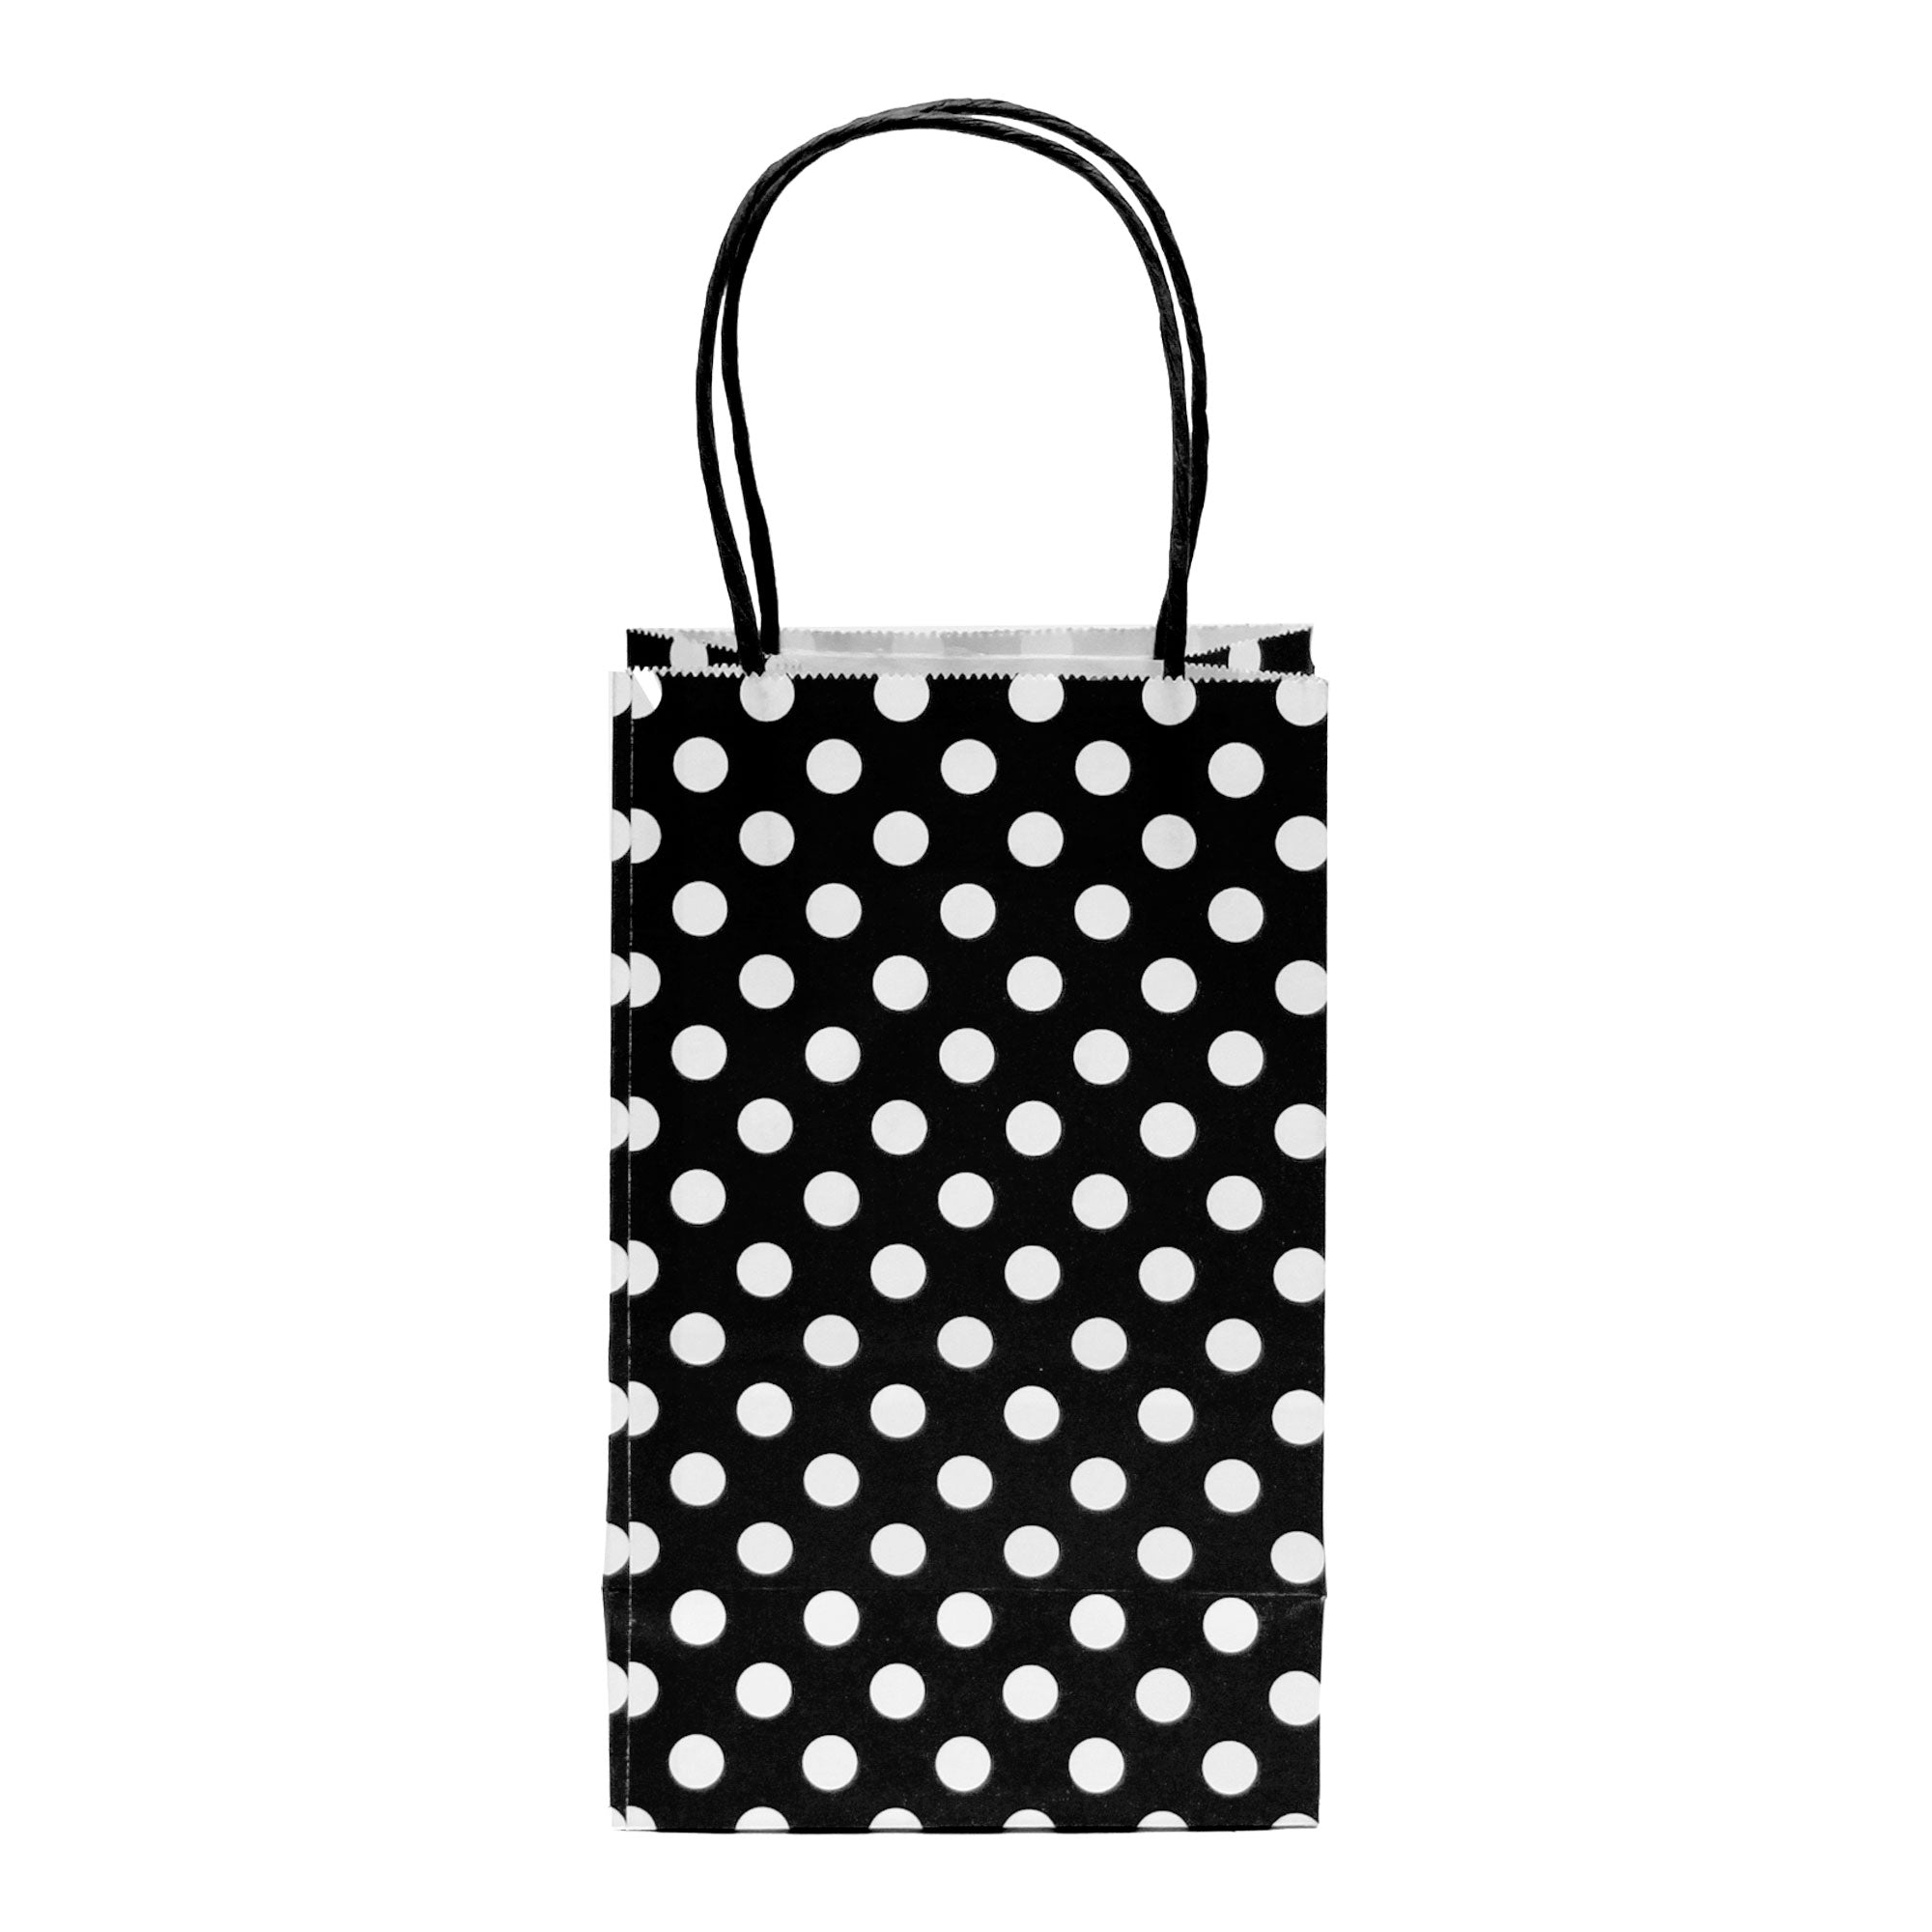 Black Polka Dot, Kraft Bags, Gift Bags, Paper Bags, Reusable Bags, Favor Bags, Wedding Favor Bags - Gift Expressions